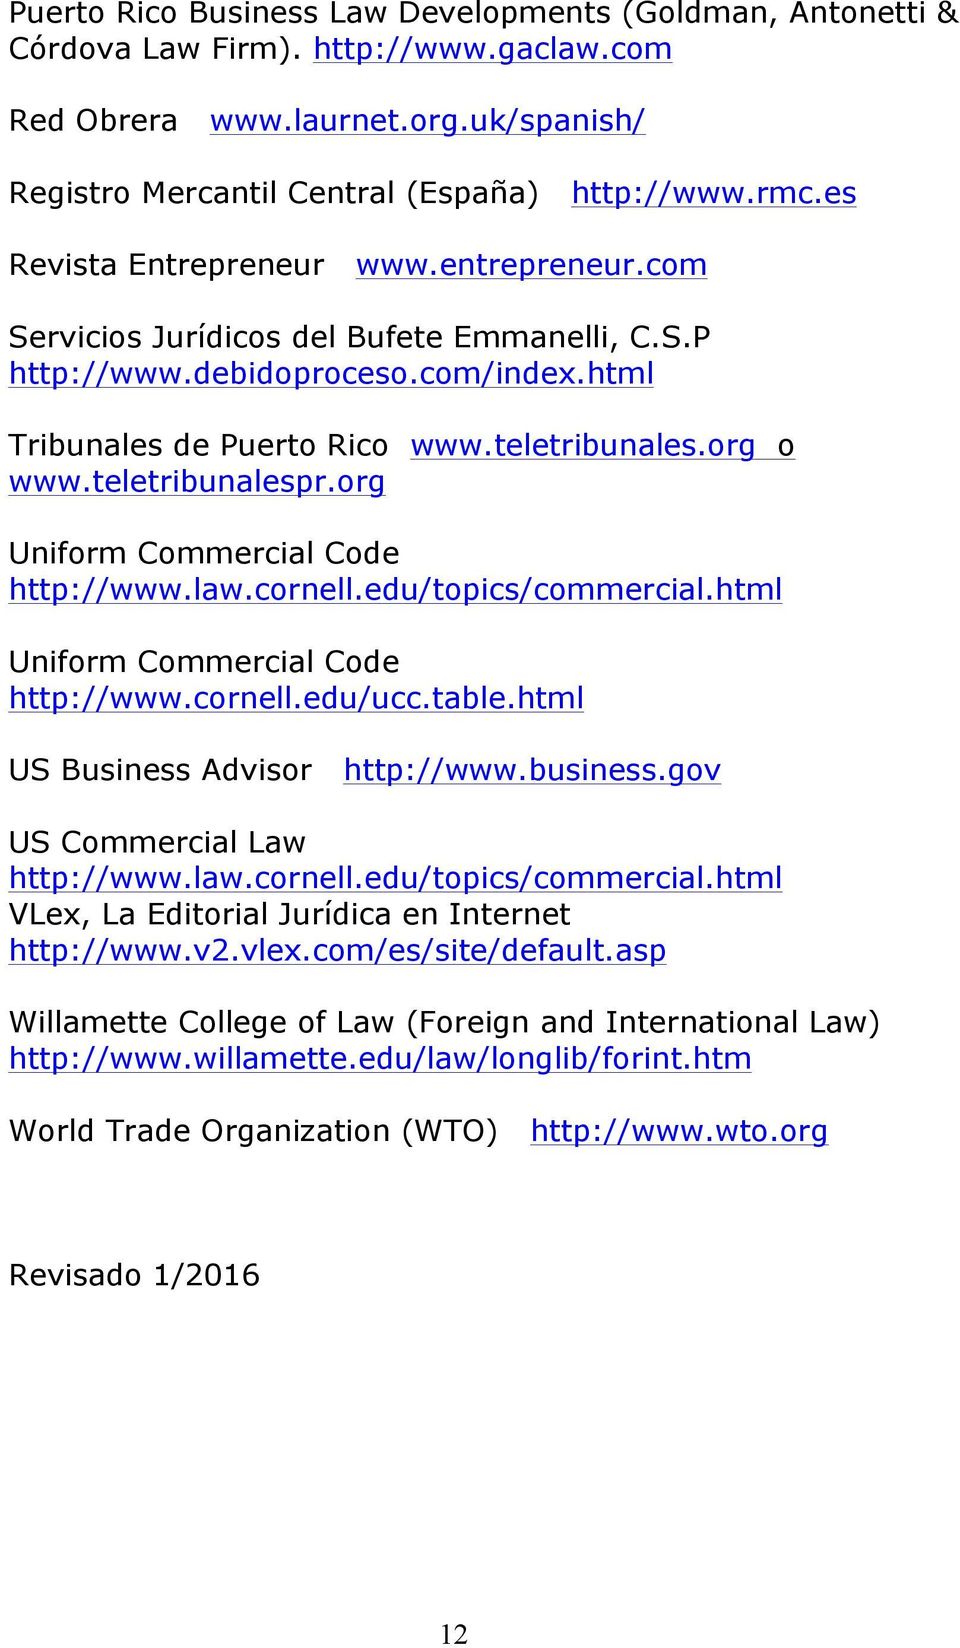 teletribunalespr.org Uniform Commercial Code http://www.law.cornell.edu/topics/commercial.html Uniform Commercial Code http://www.cornell.edu/ucc.table.html US Business Advisor http://www.business.